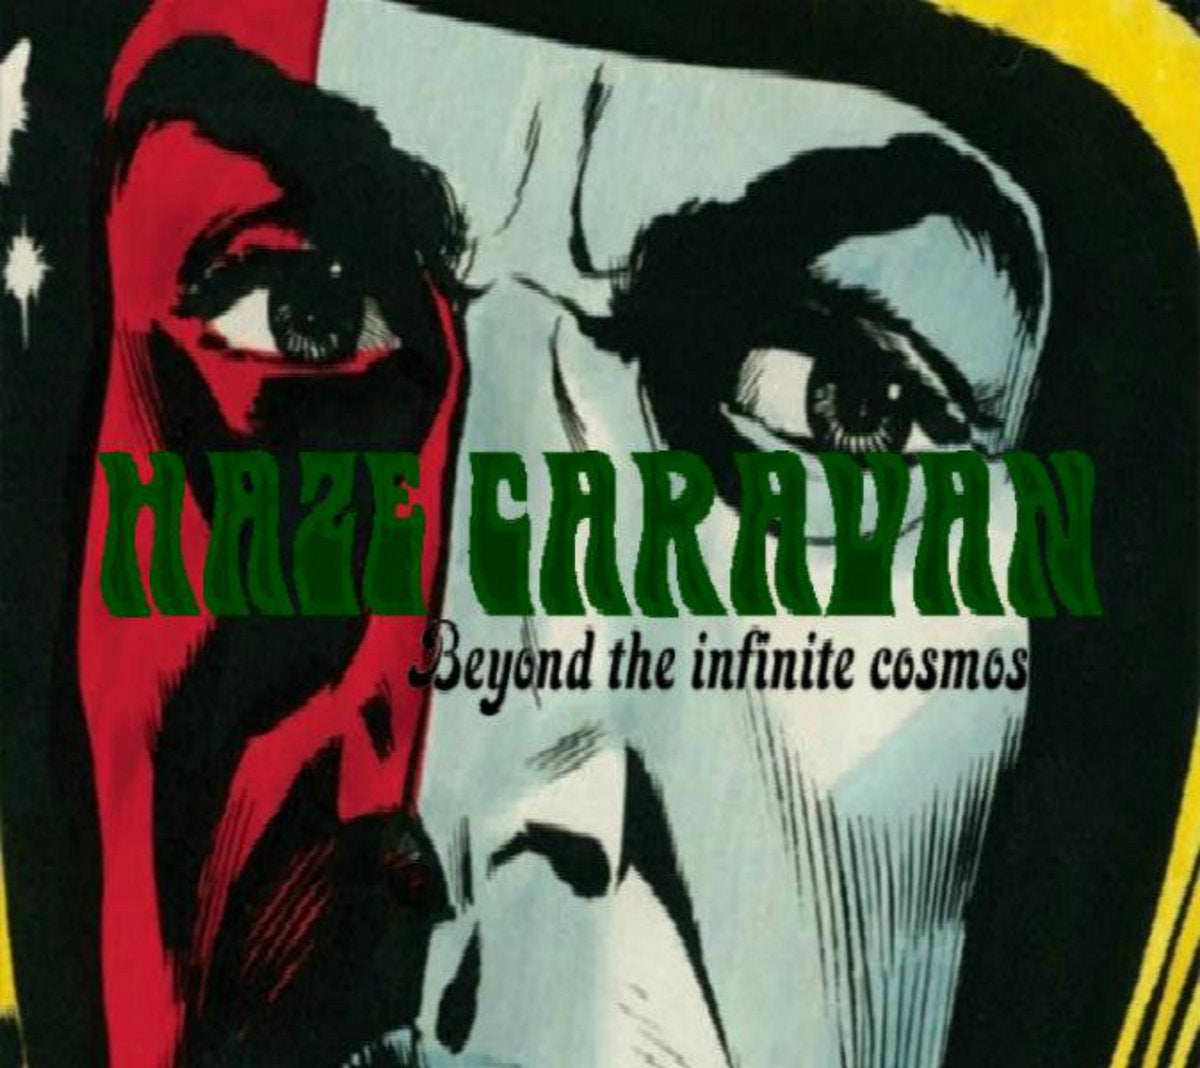 Haze Caravan - "Beyond the Infinite Cosmos" Compact Disc